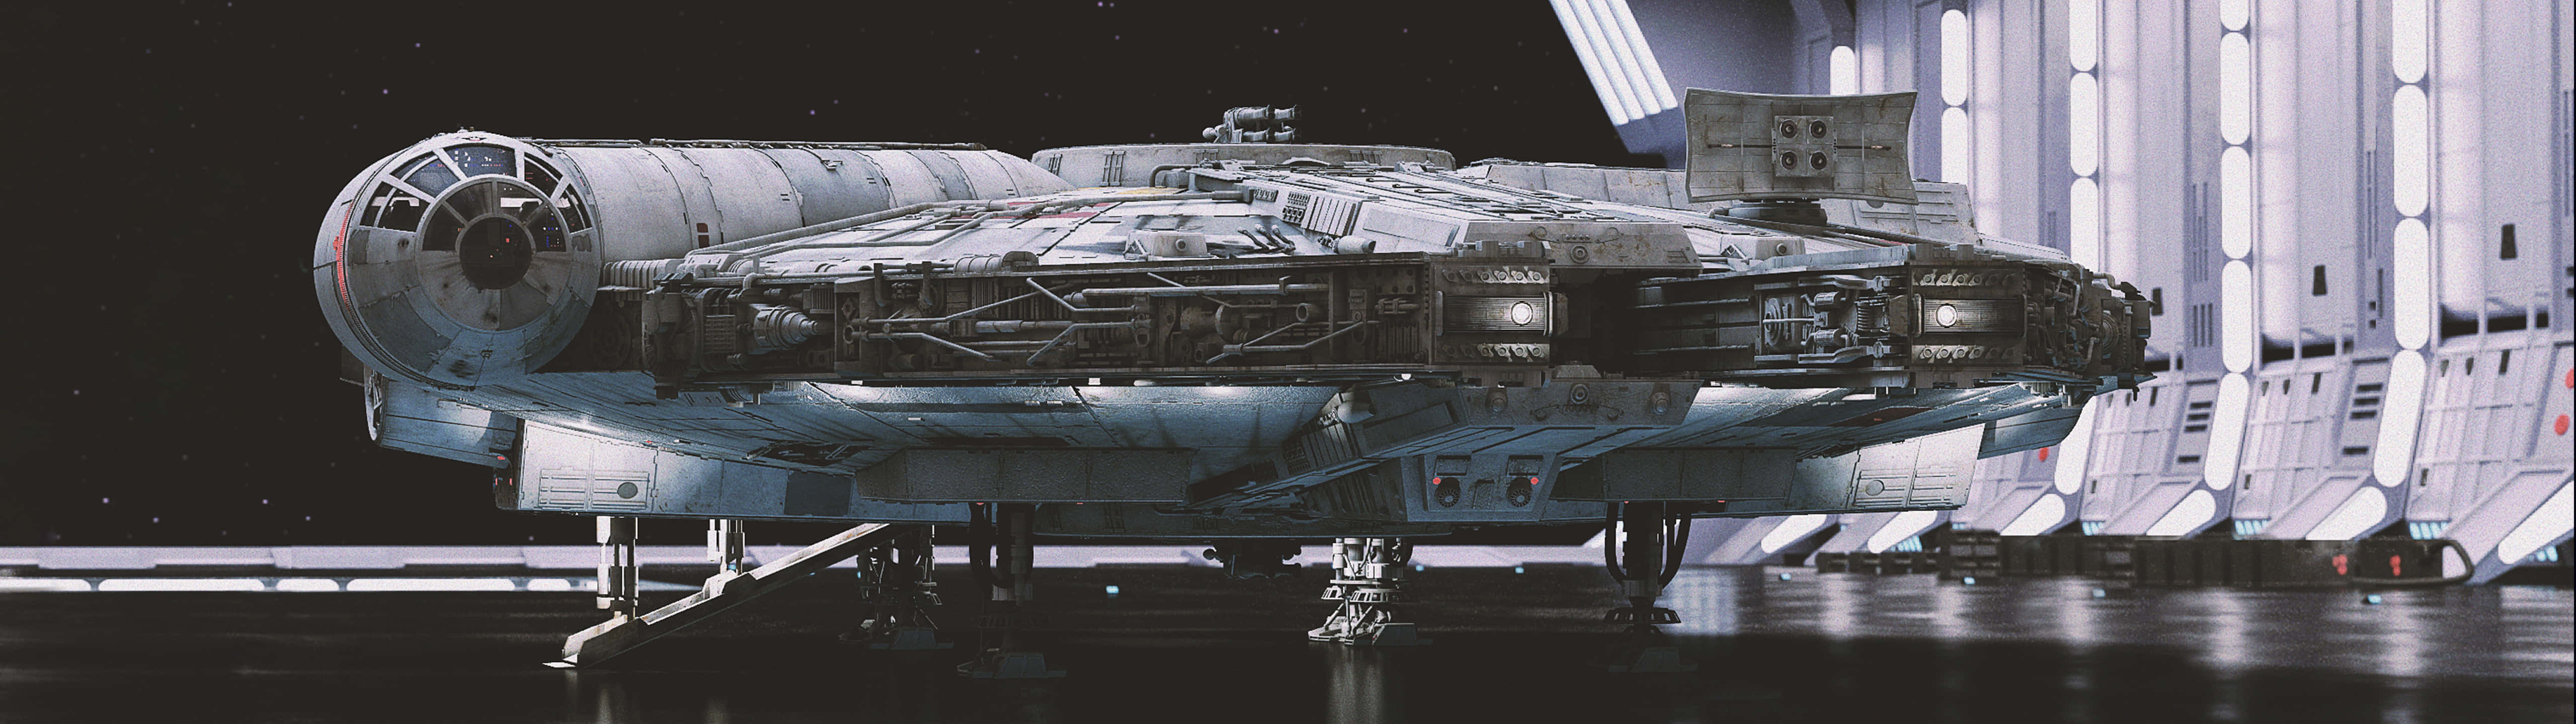 Dasikonische Millennium Falcon, Berühmt Geworden Durch Han Solo. Wallpaper